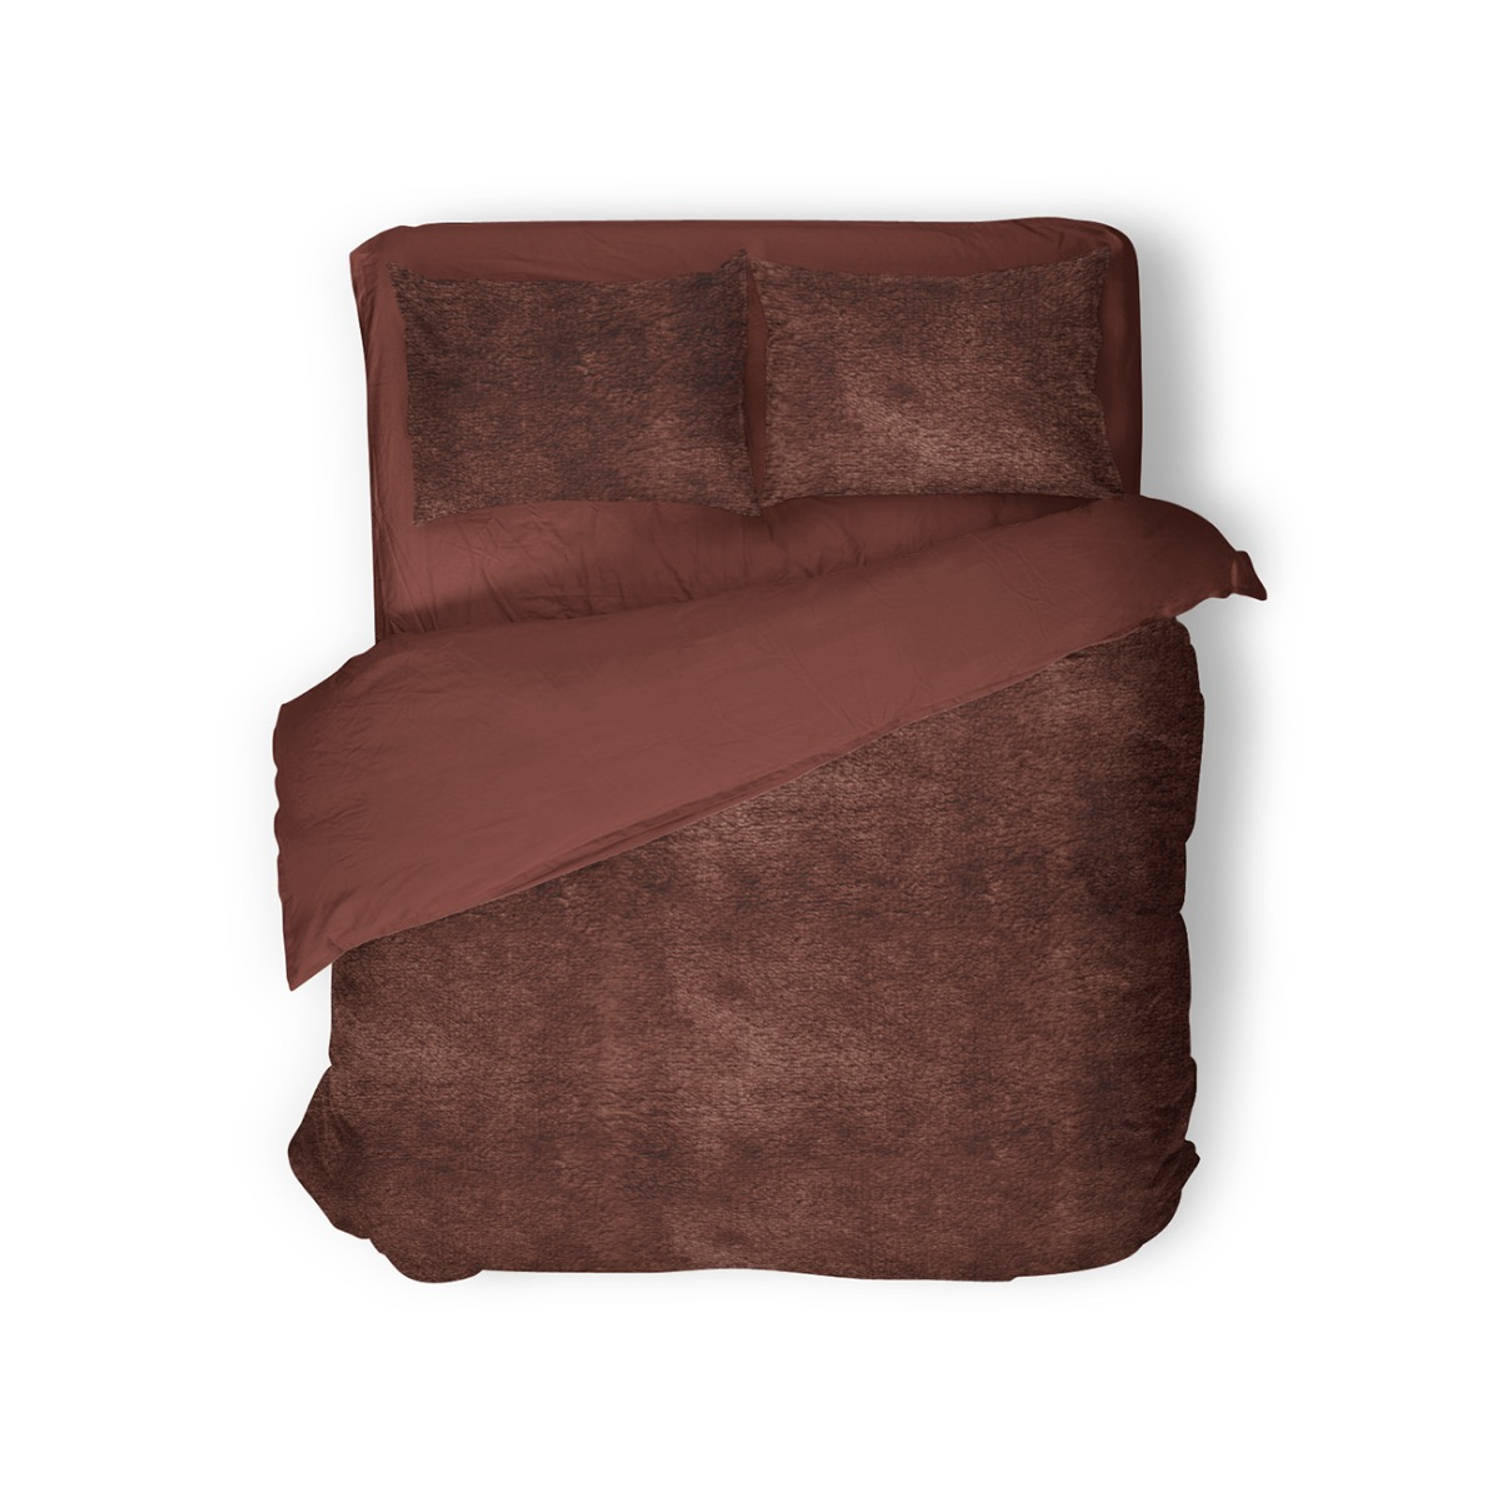 Eleganzzz Dekbedovertrek Flanel Fleece roze bruin 240x200-220cm